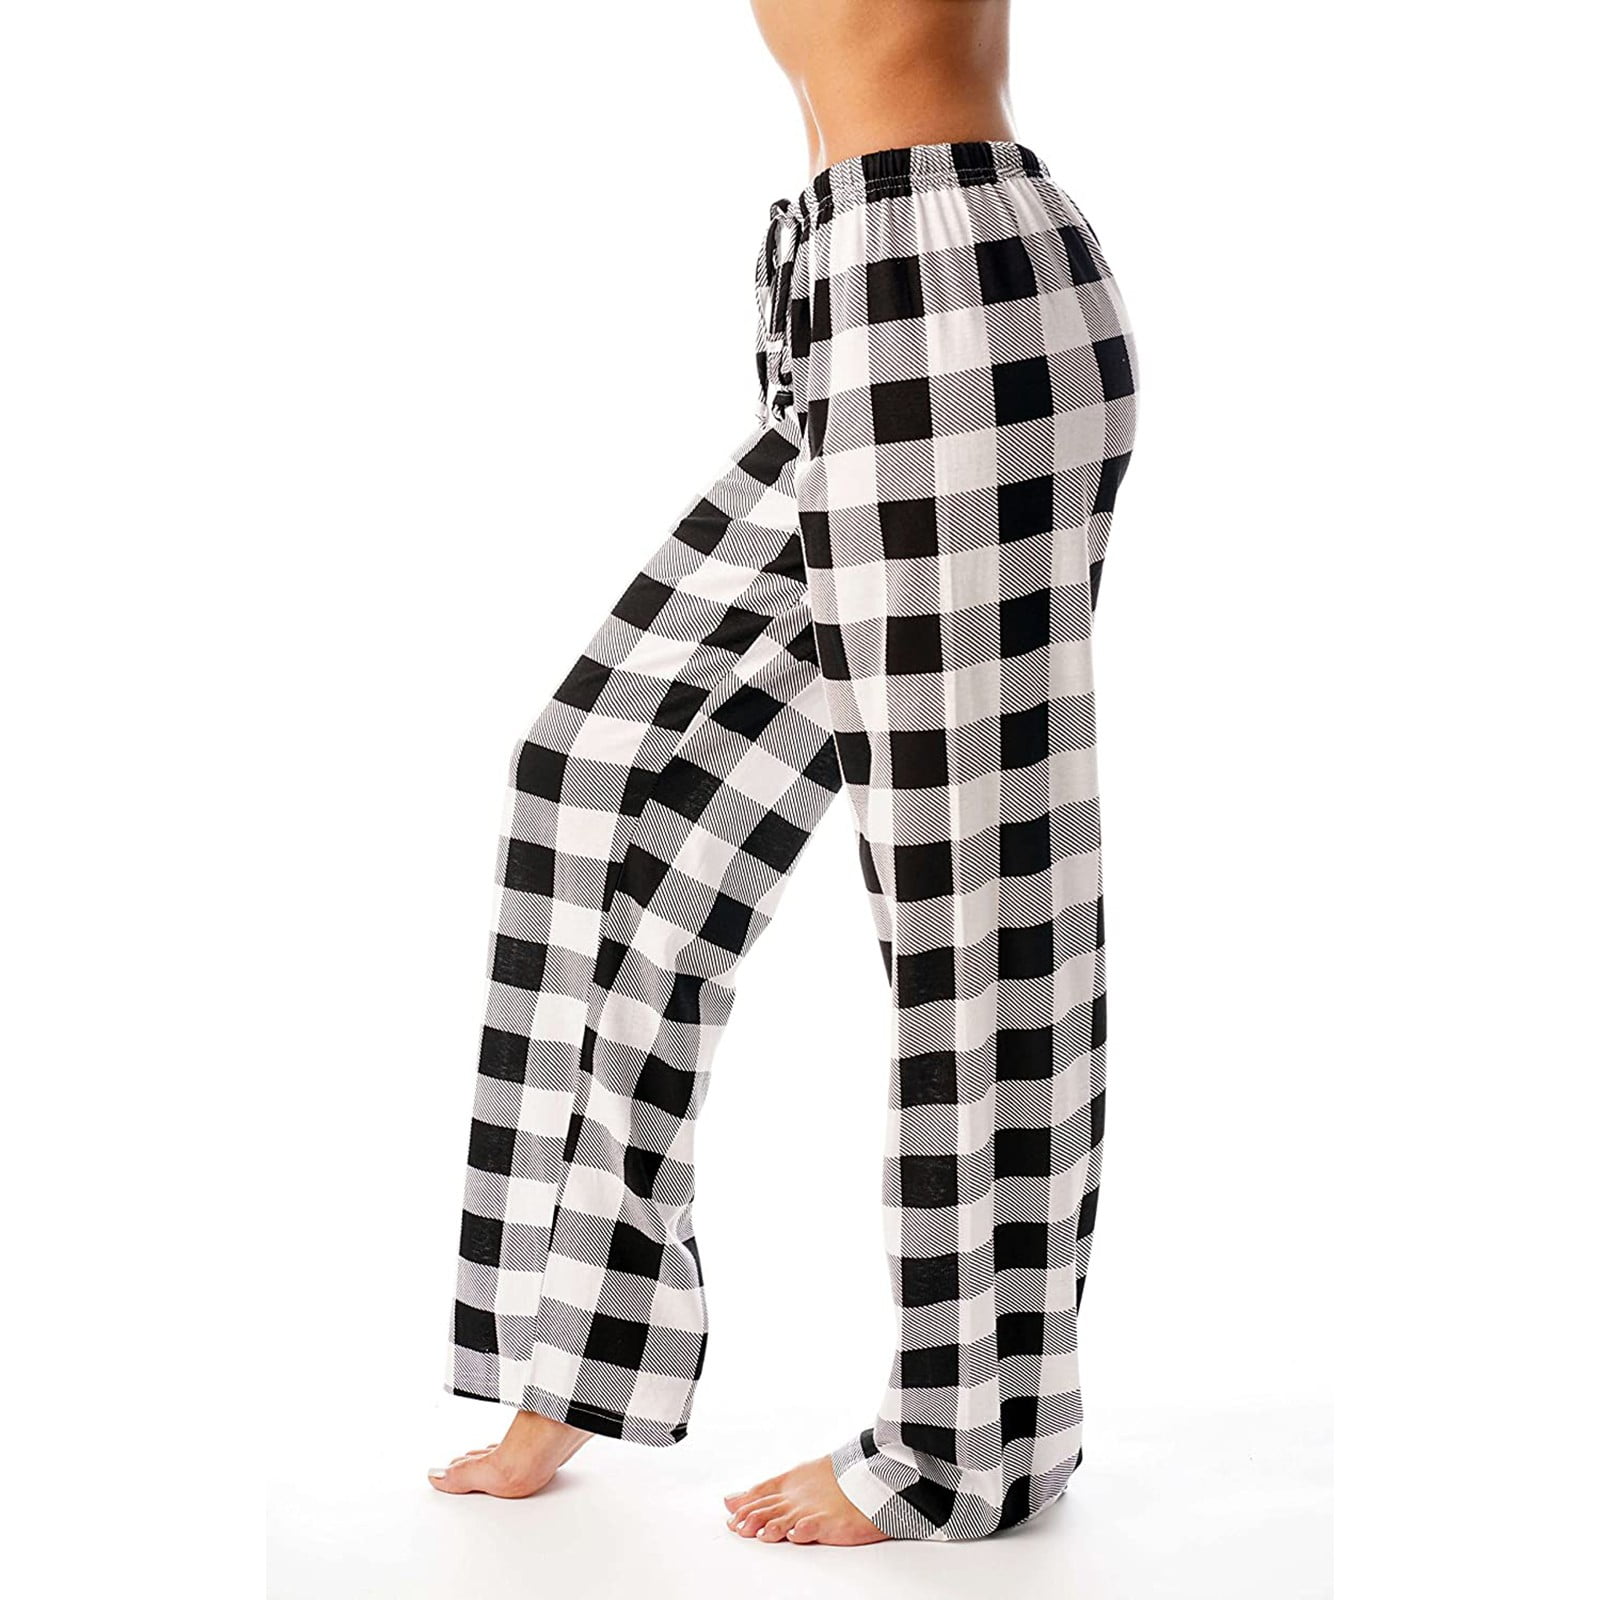 Ydkzymd Plaid Pants for Women Fleece Flannel Buffalo Plaid Pajamas ...